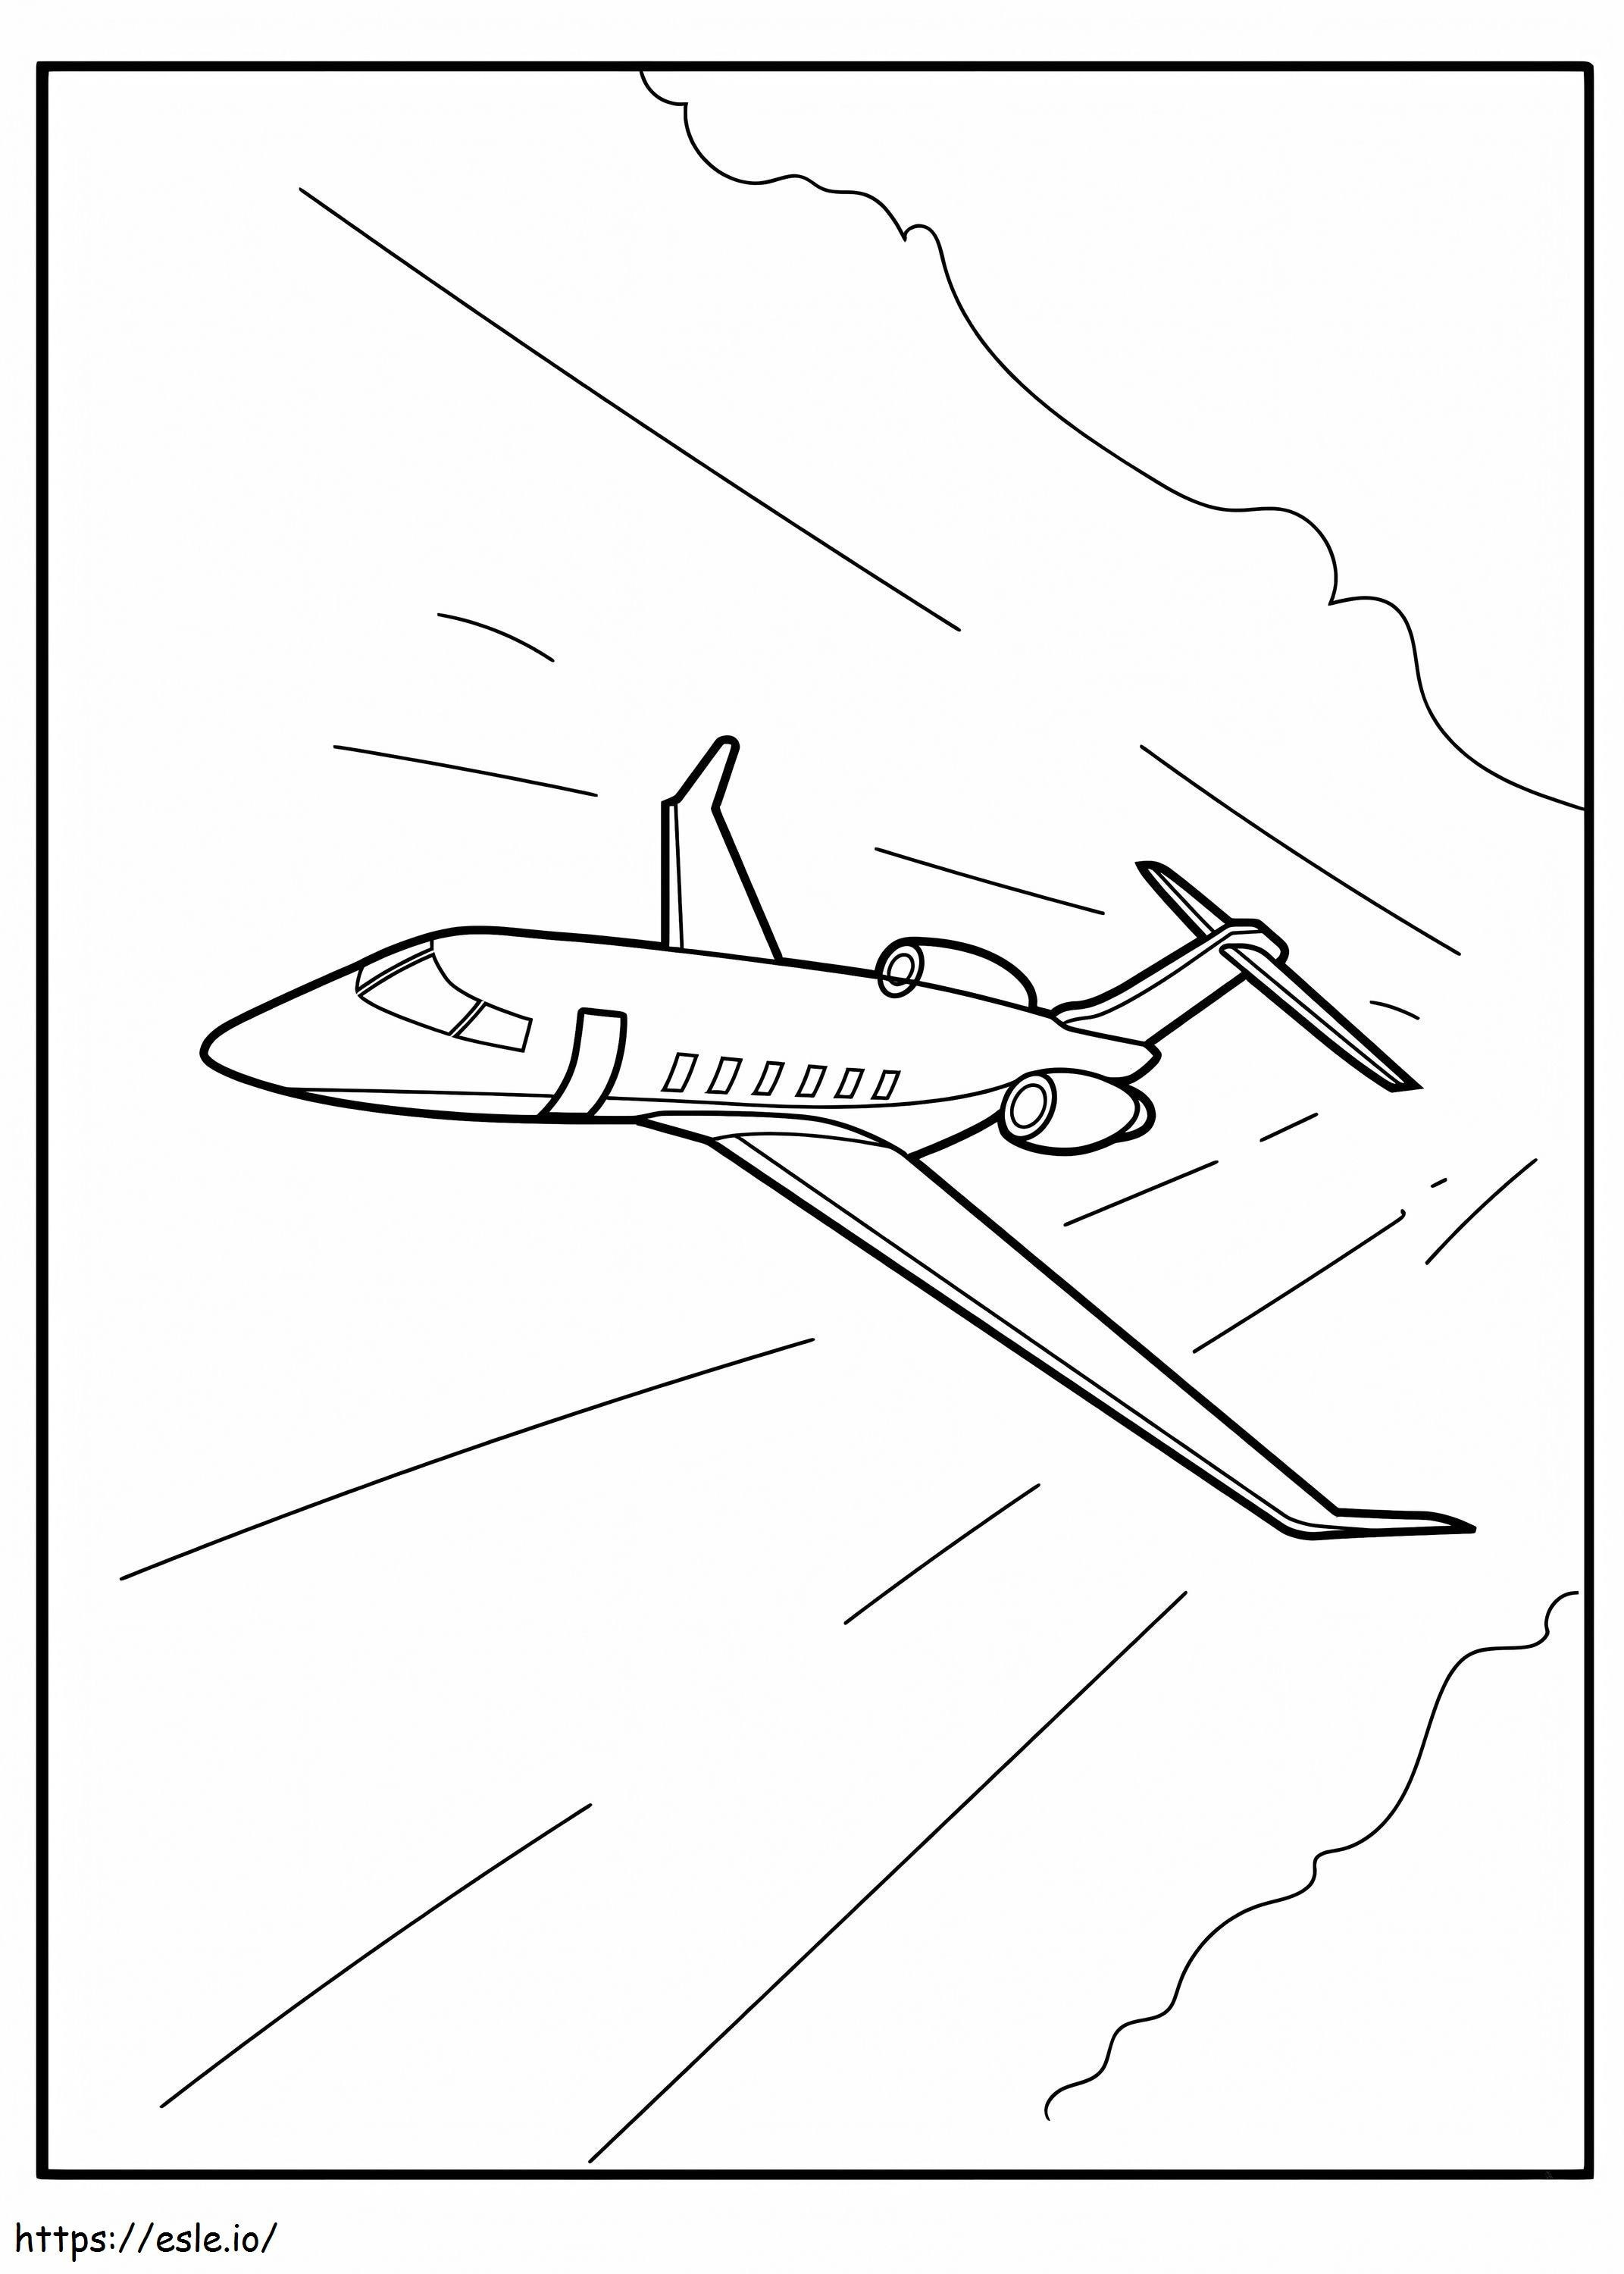 Normalne samoloty kolorowanka